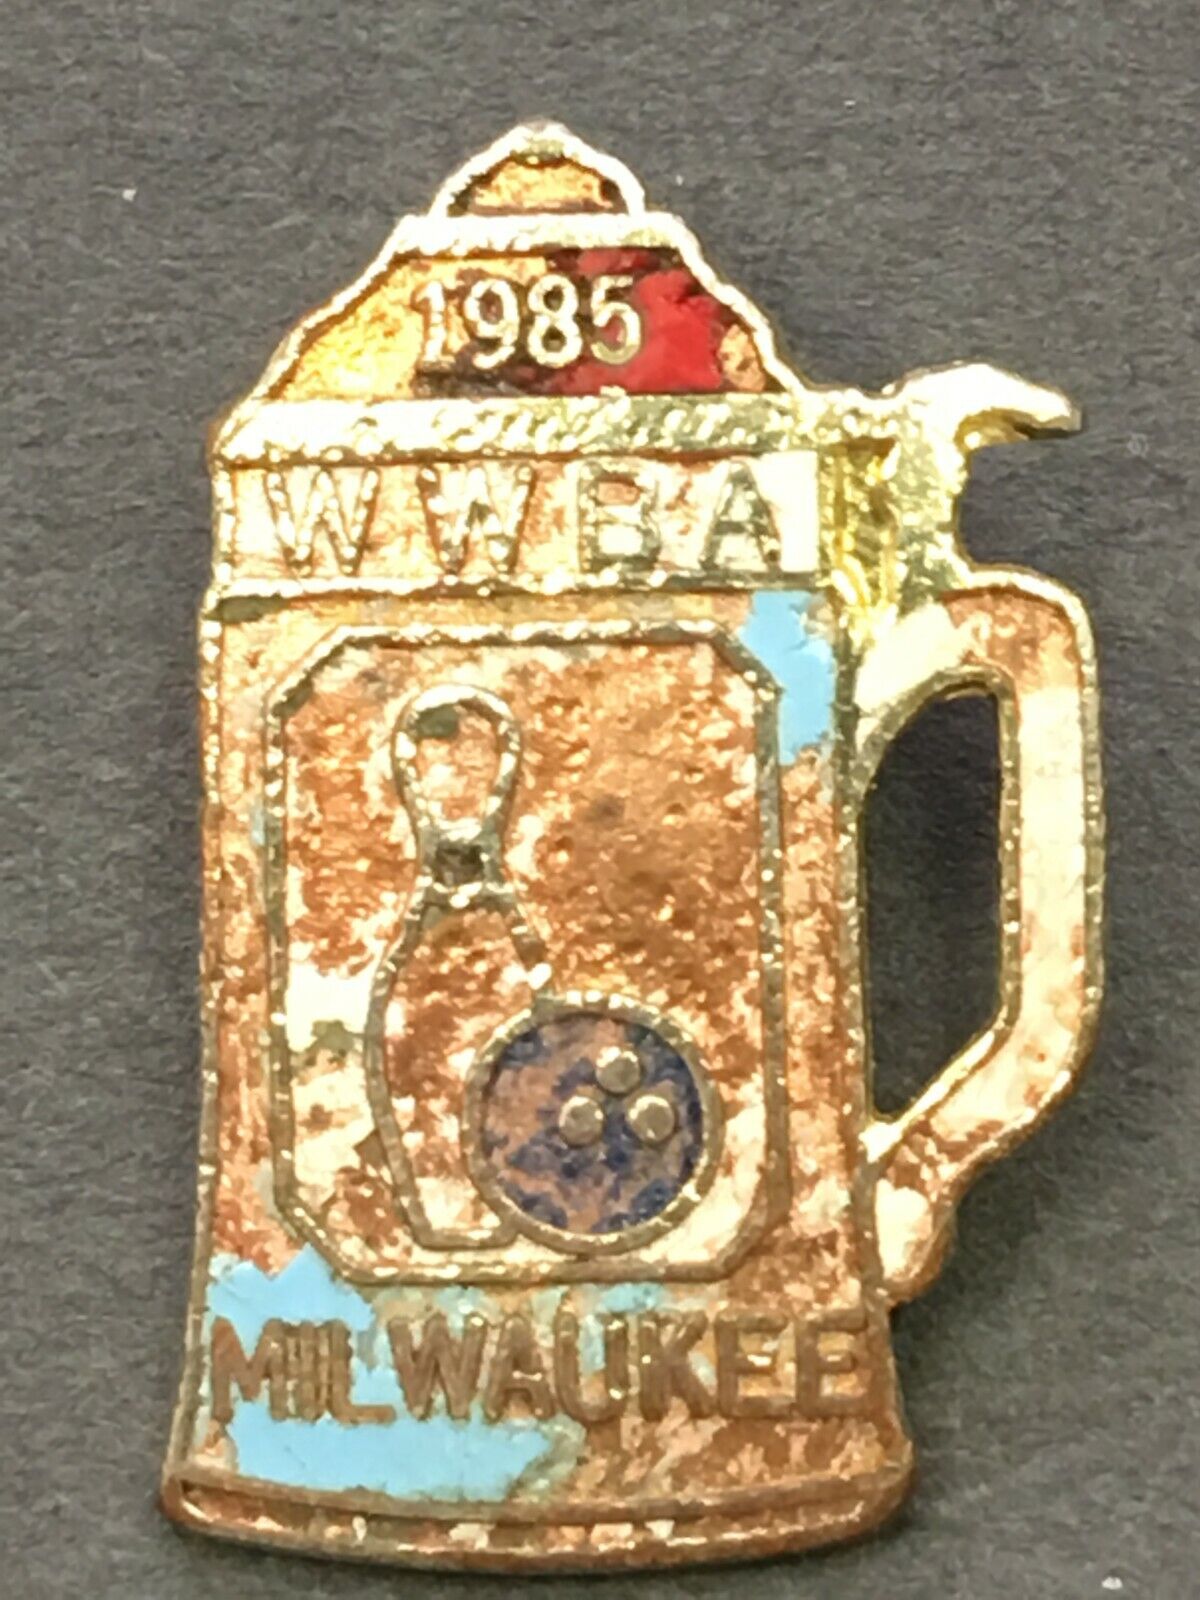 Wisconsin Woman\'s Bowling WWBA Milwaukee WI Beer Stein Tack Pin Lapel 1985